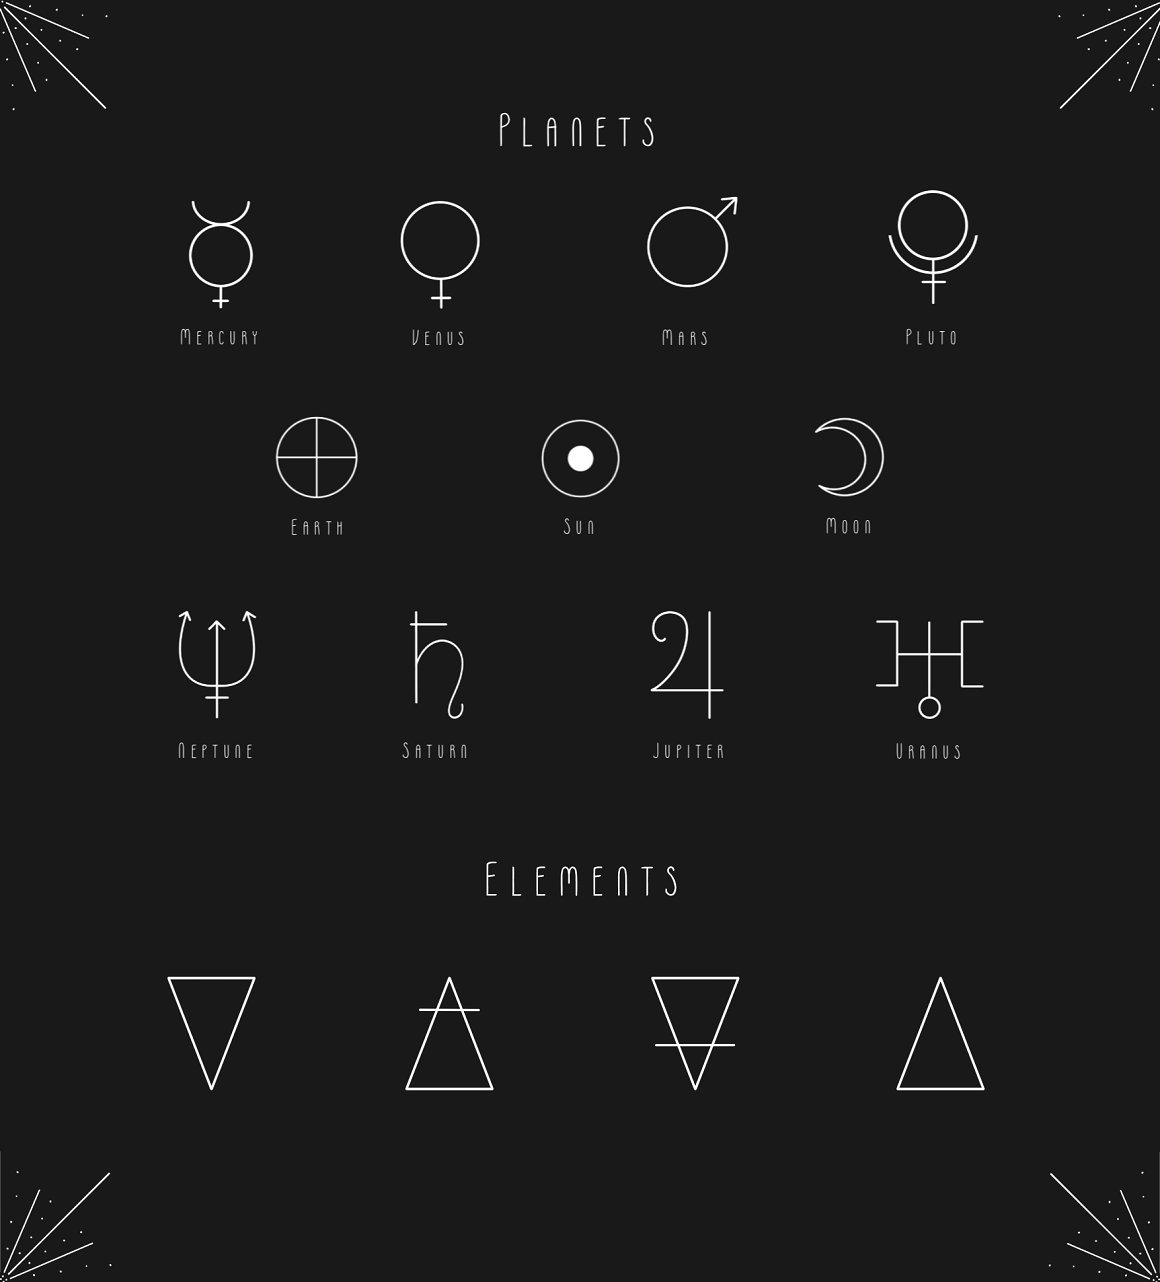 Different interpretations of the zodiac signs.